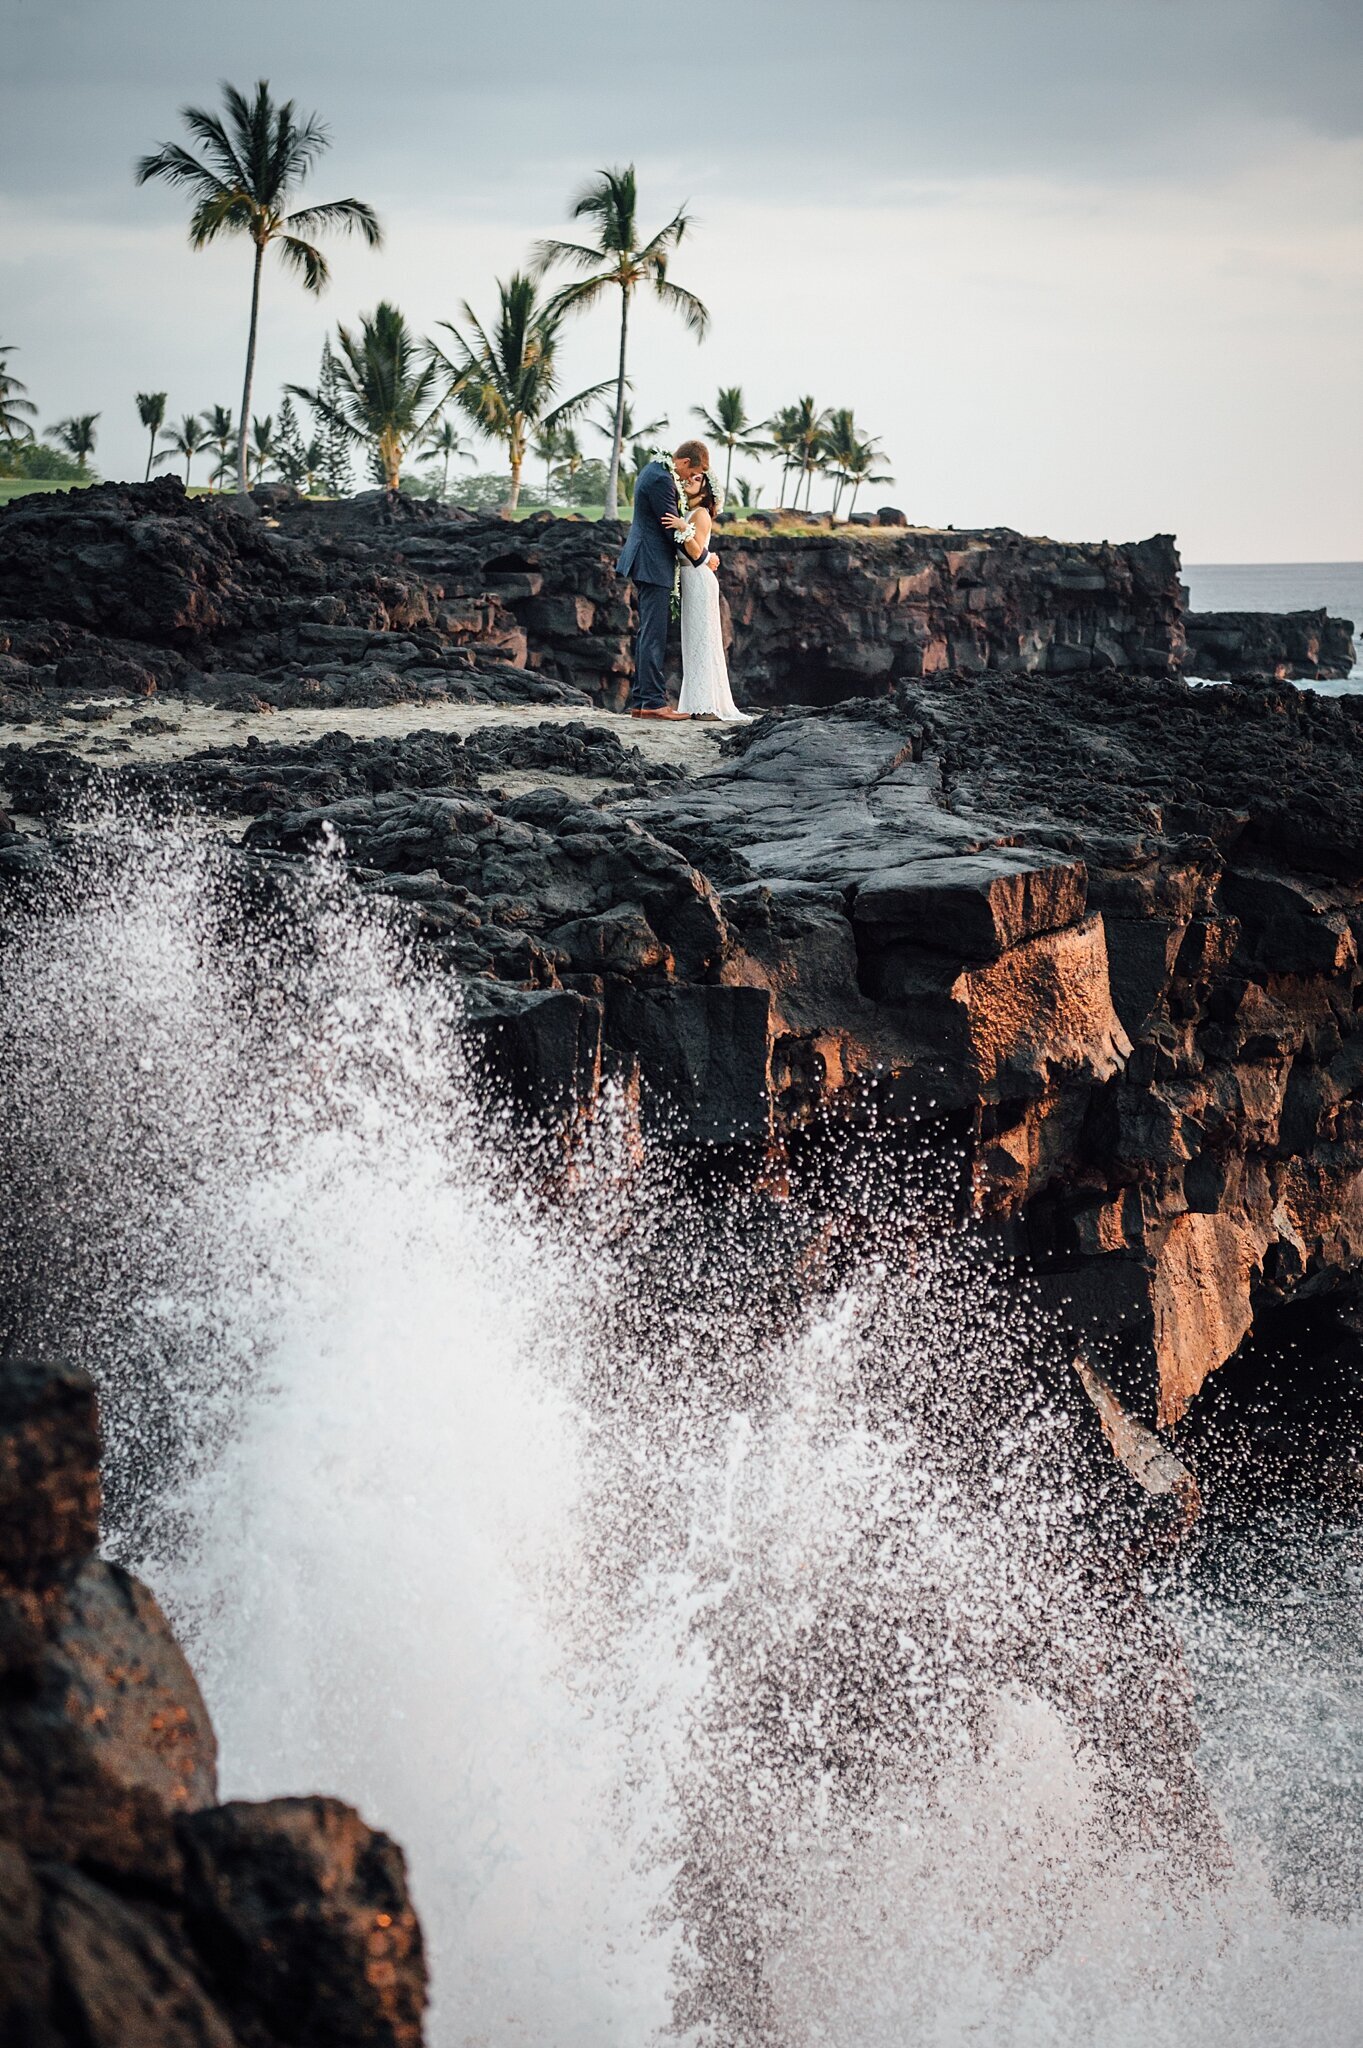 waves crashing on rock cliffs during wedding day in hawaii